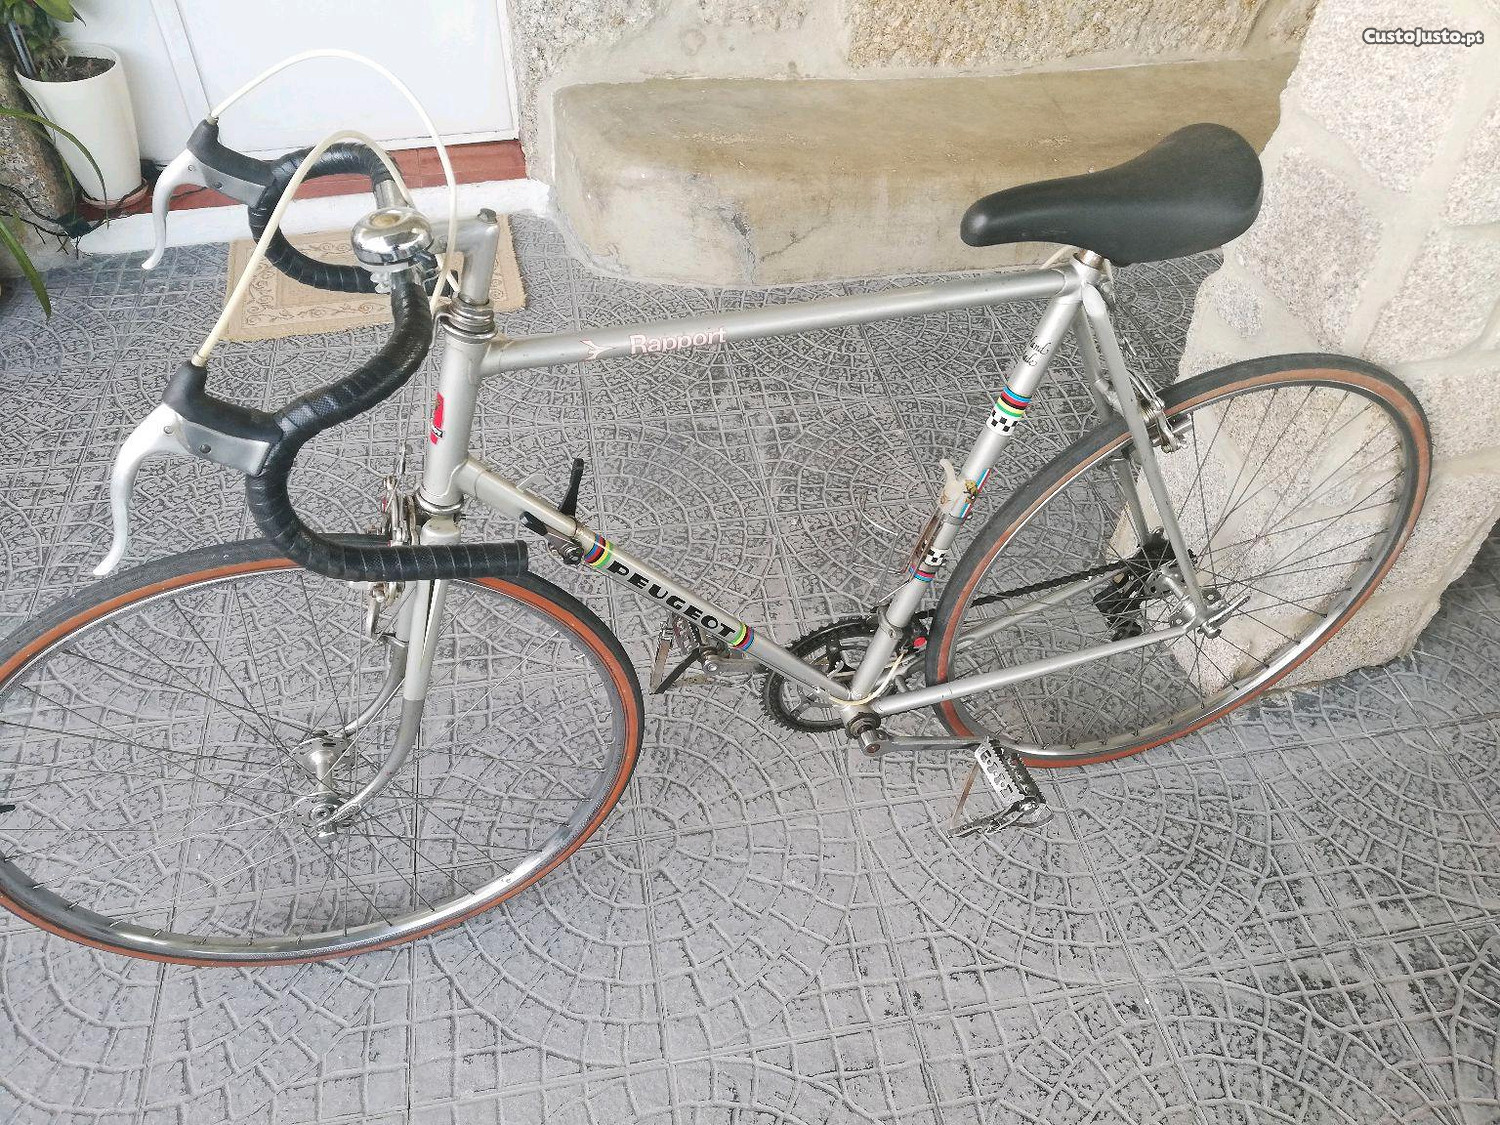 Bicicleta peugeot rapport antiga